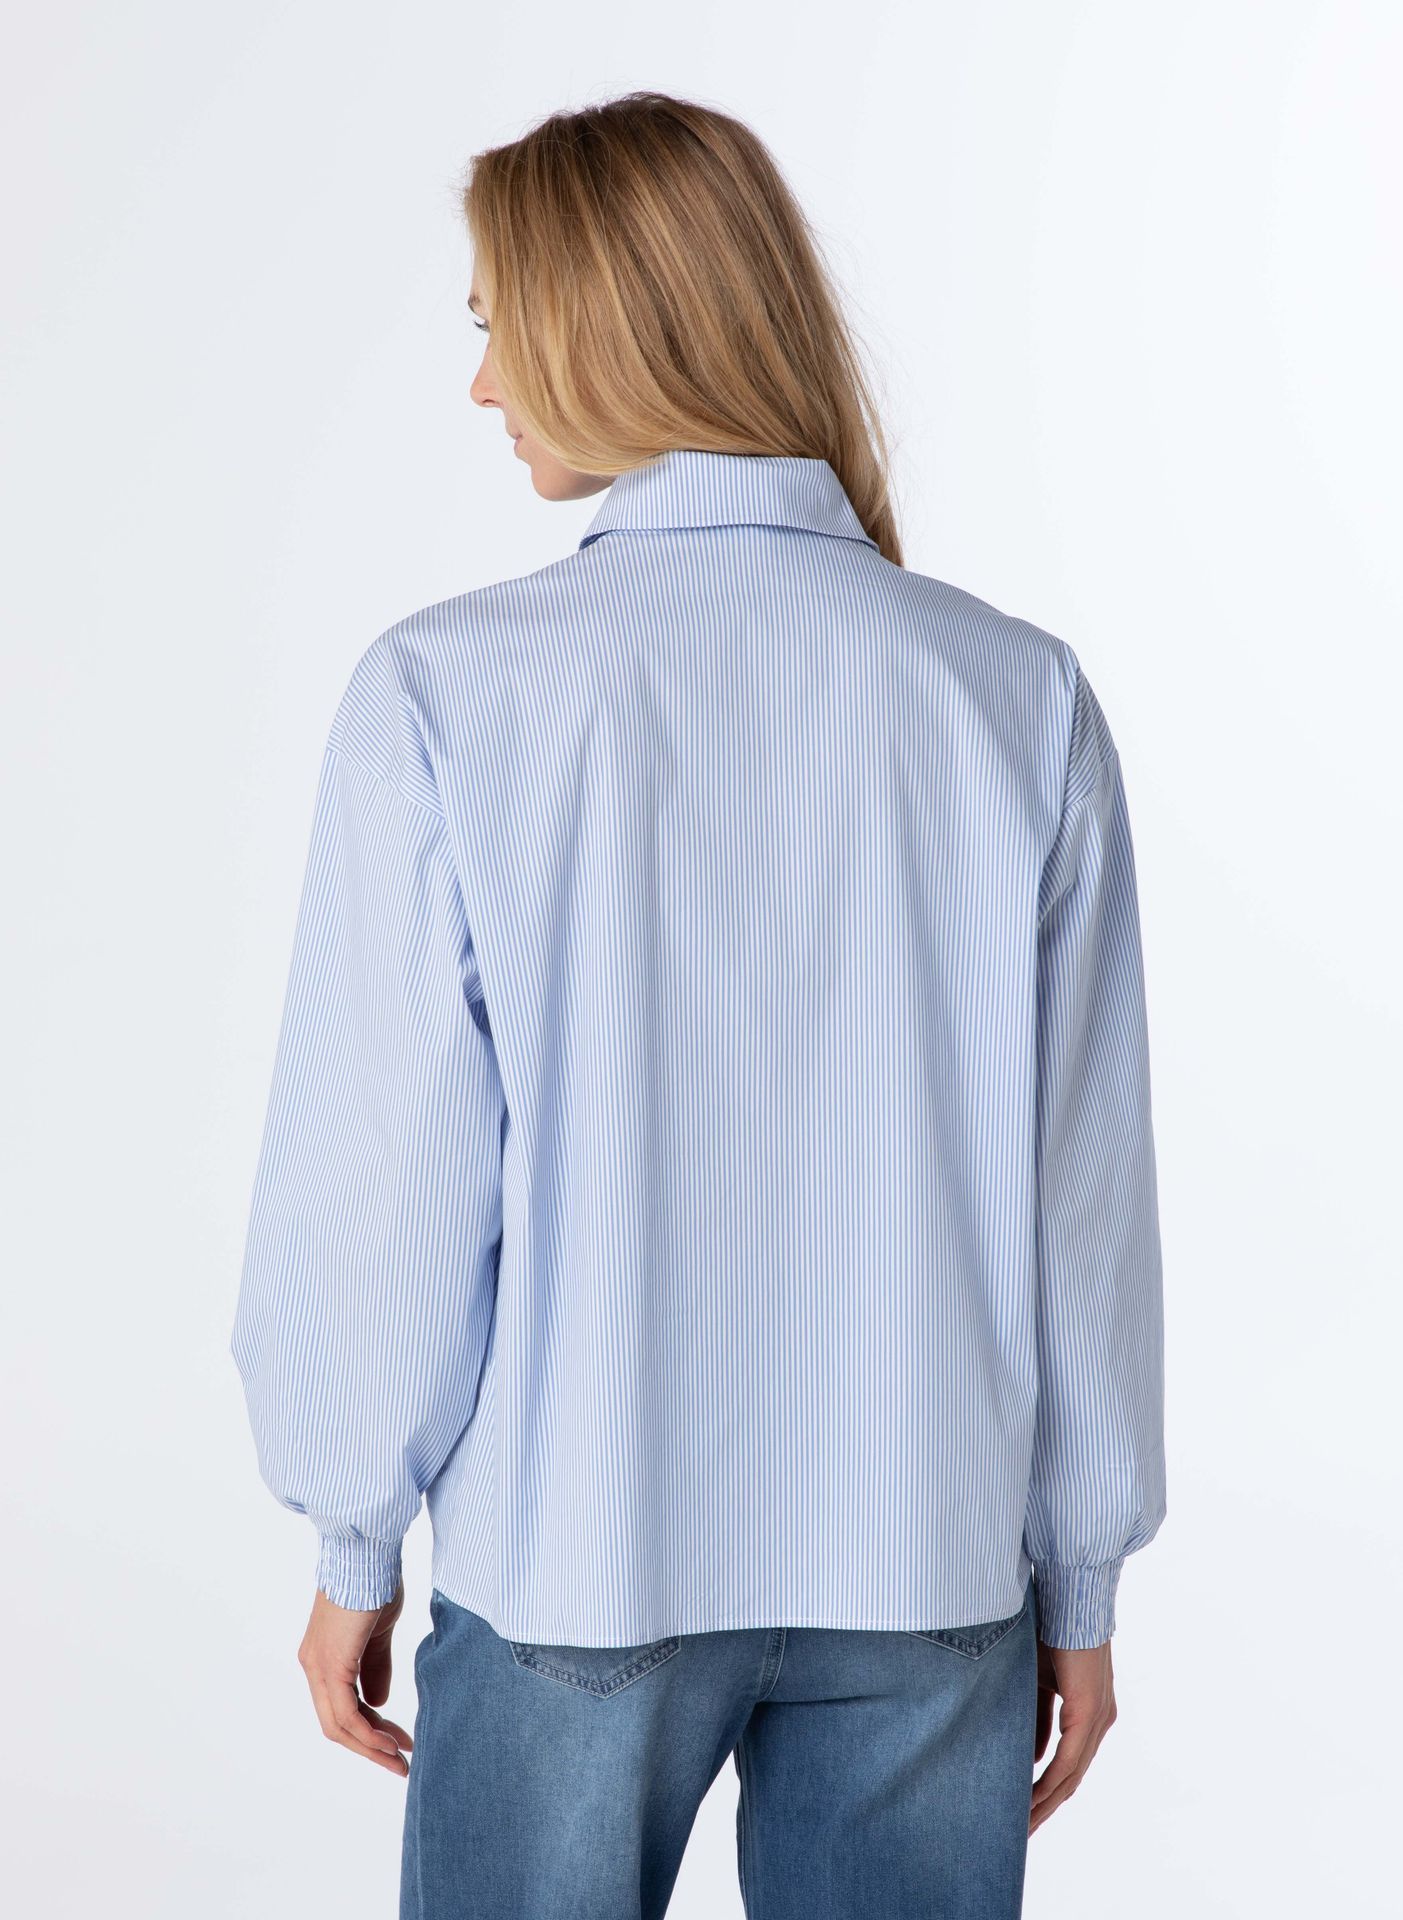 Norah Blauw gestreepte katoenen blouse blue/white 213942-431